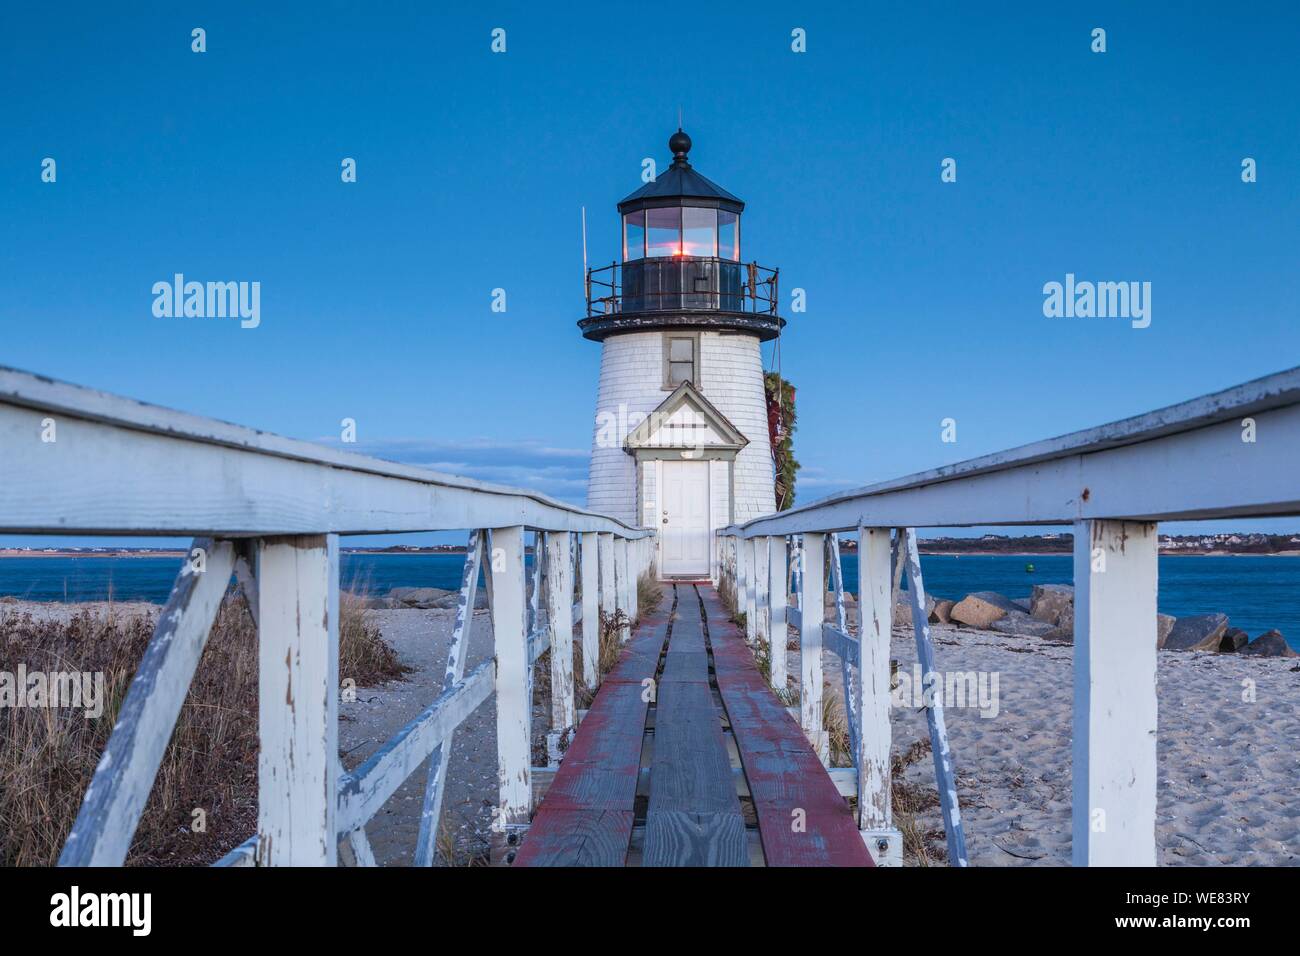 United States, New England, Massachusetts, Nantucket Island, Nantucket, Brant Point Lighthouse with a Christmas wreath, dusk Stock Photo